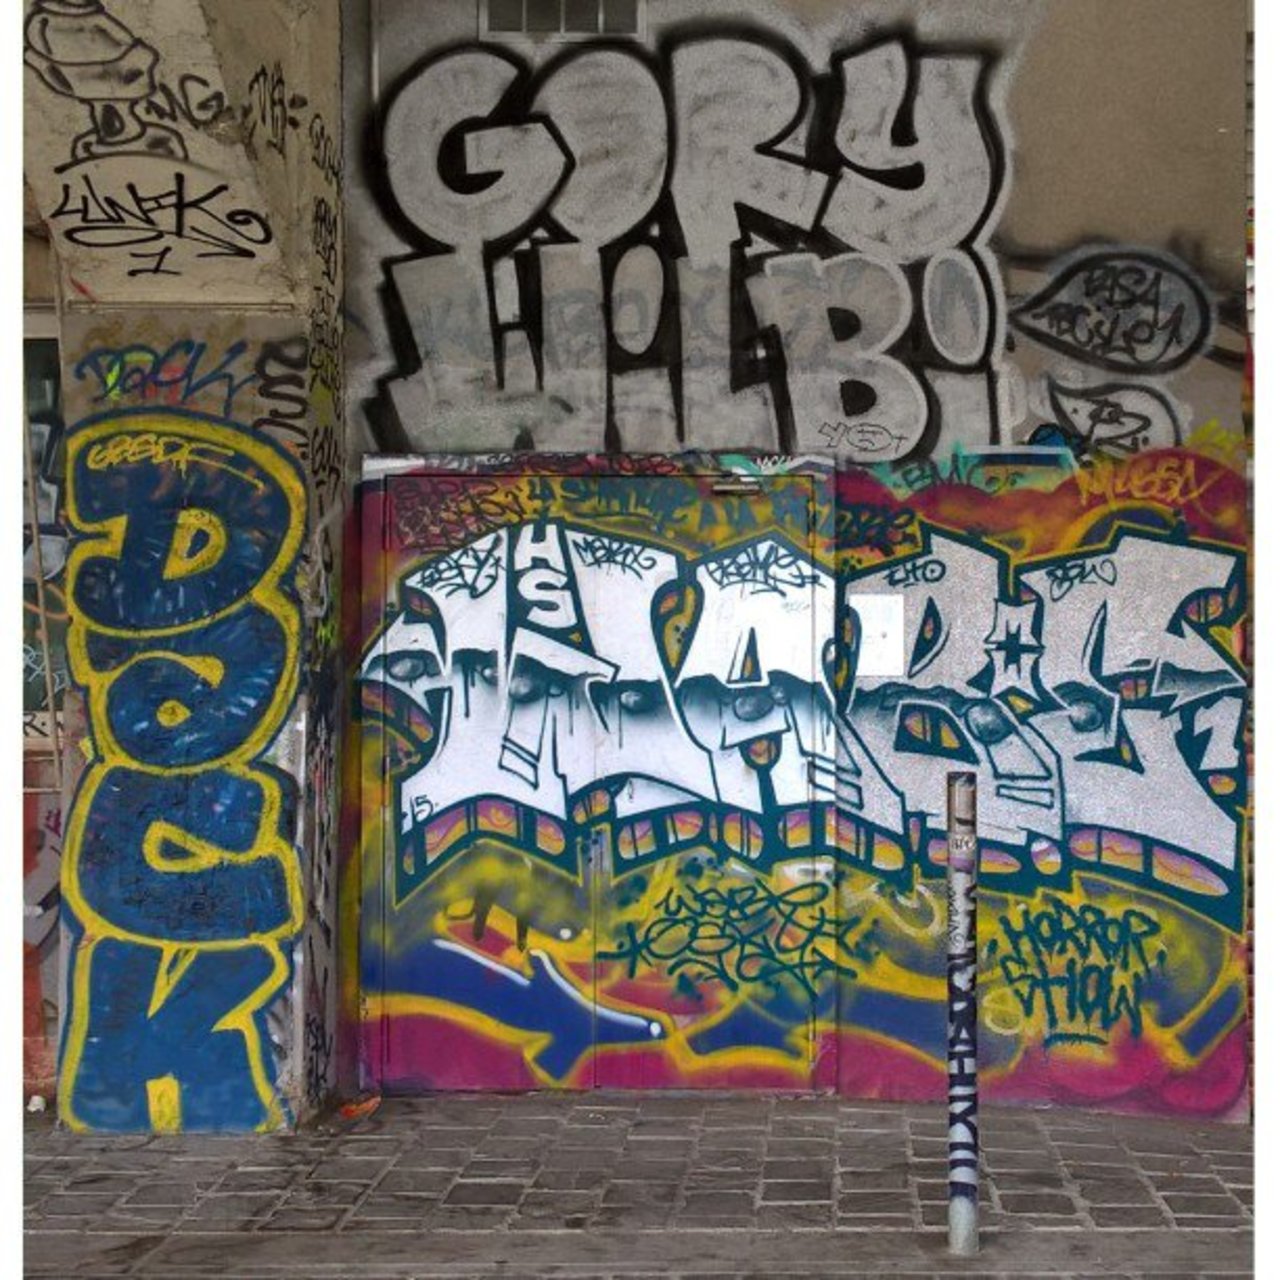 #Paris #graffiti photo by @maxdimontemarciano http://ift.tt/1RuVvq0 #StreetArt https://t.co/0yIltf843z